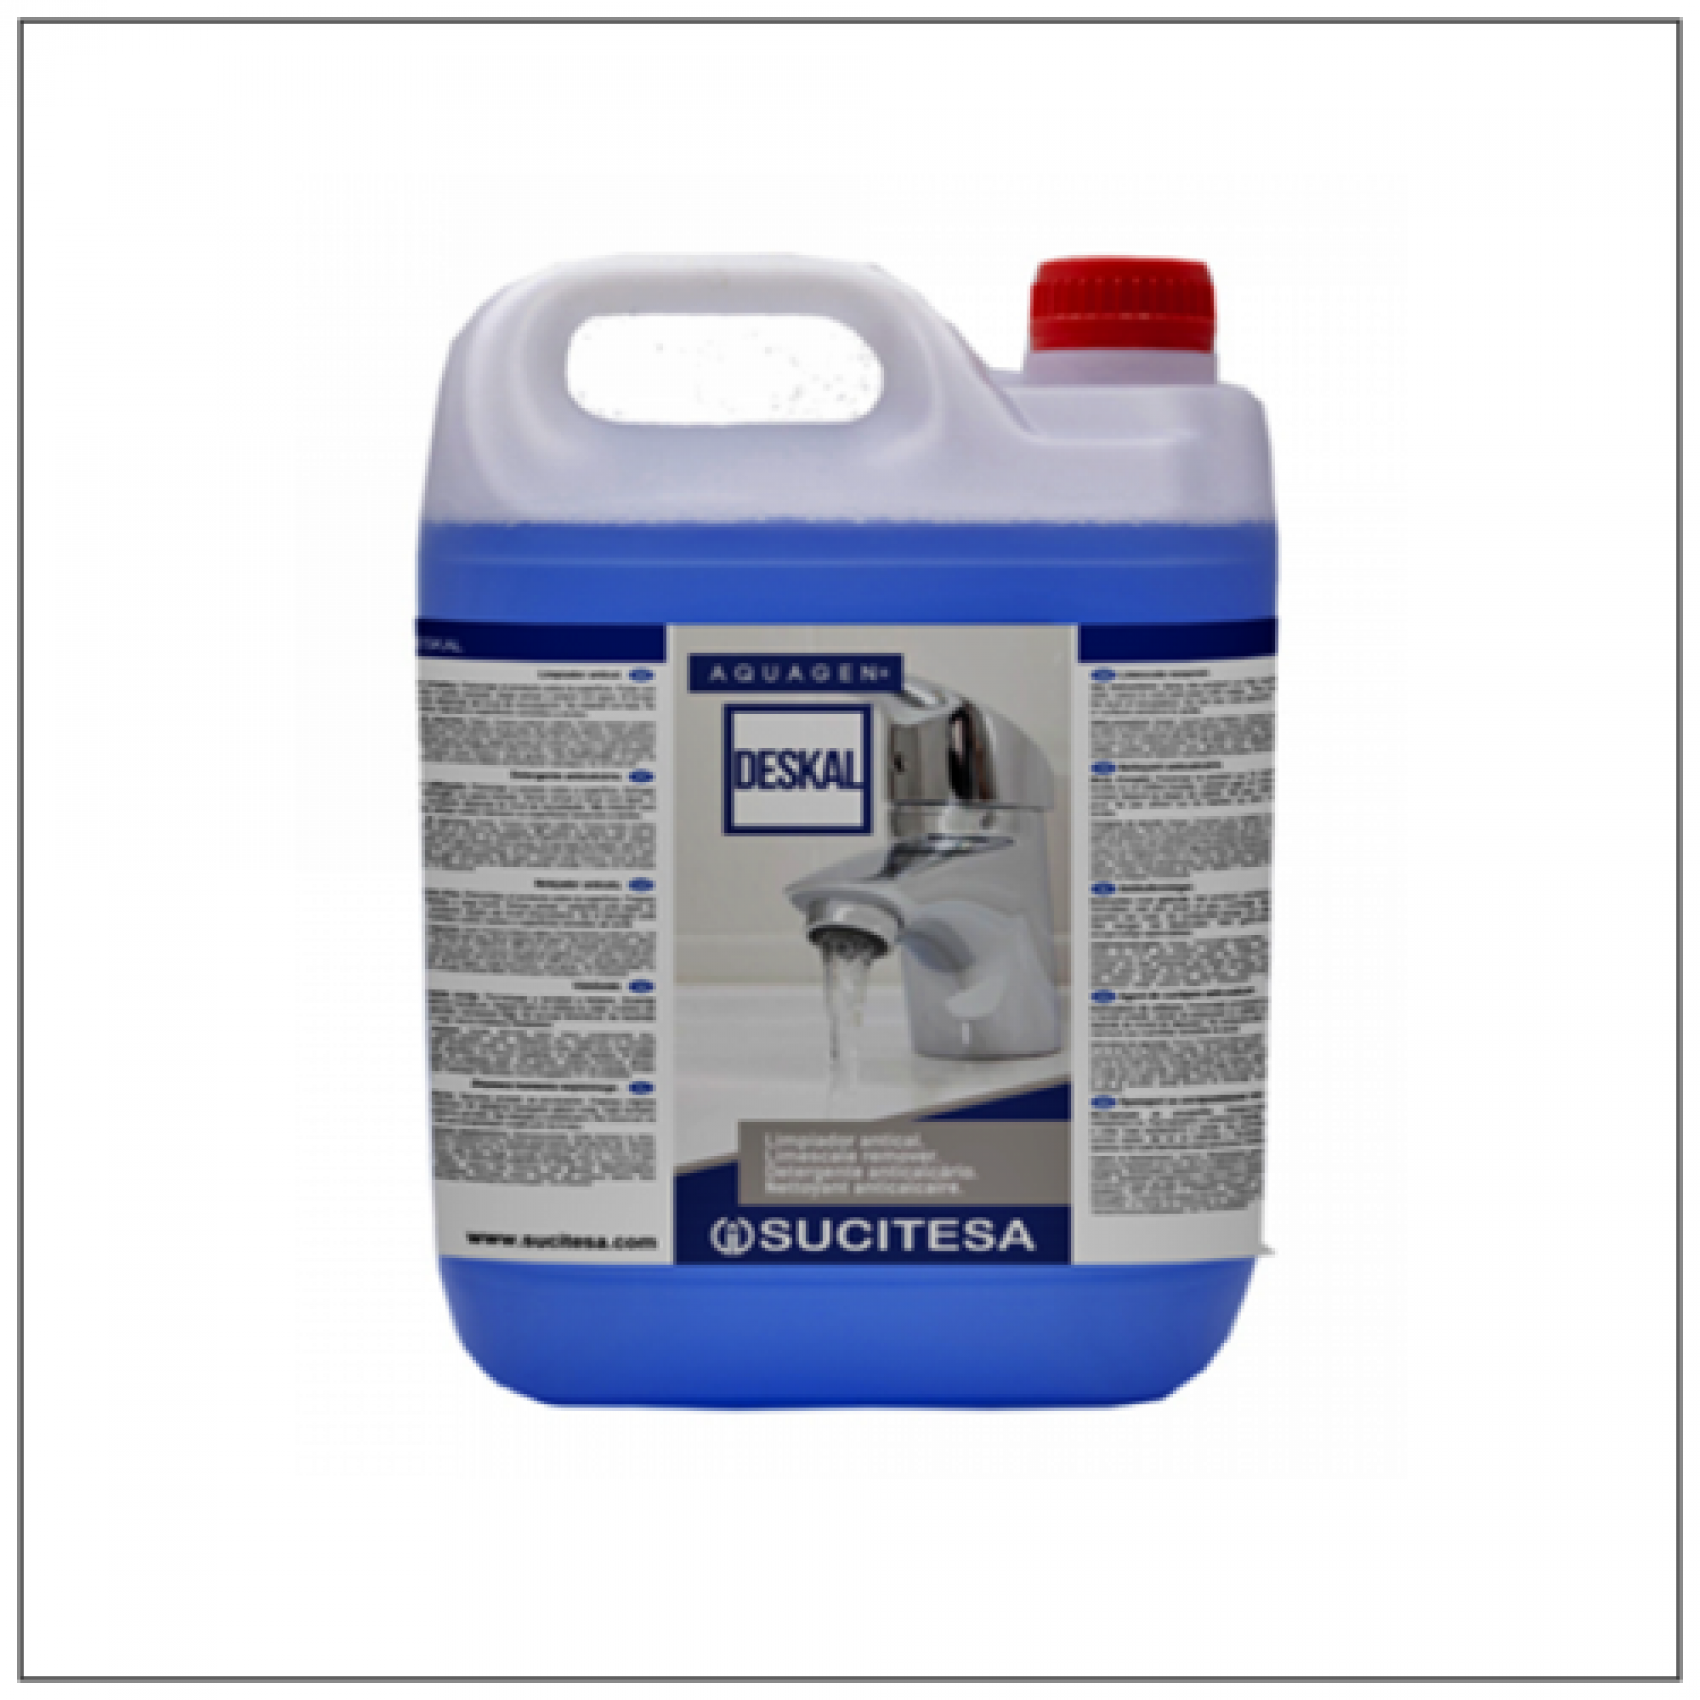 Detergent grupuri sanitare  Aquagen DESKAL - canistra 5 litri